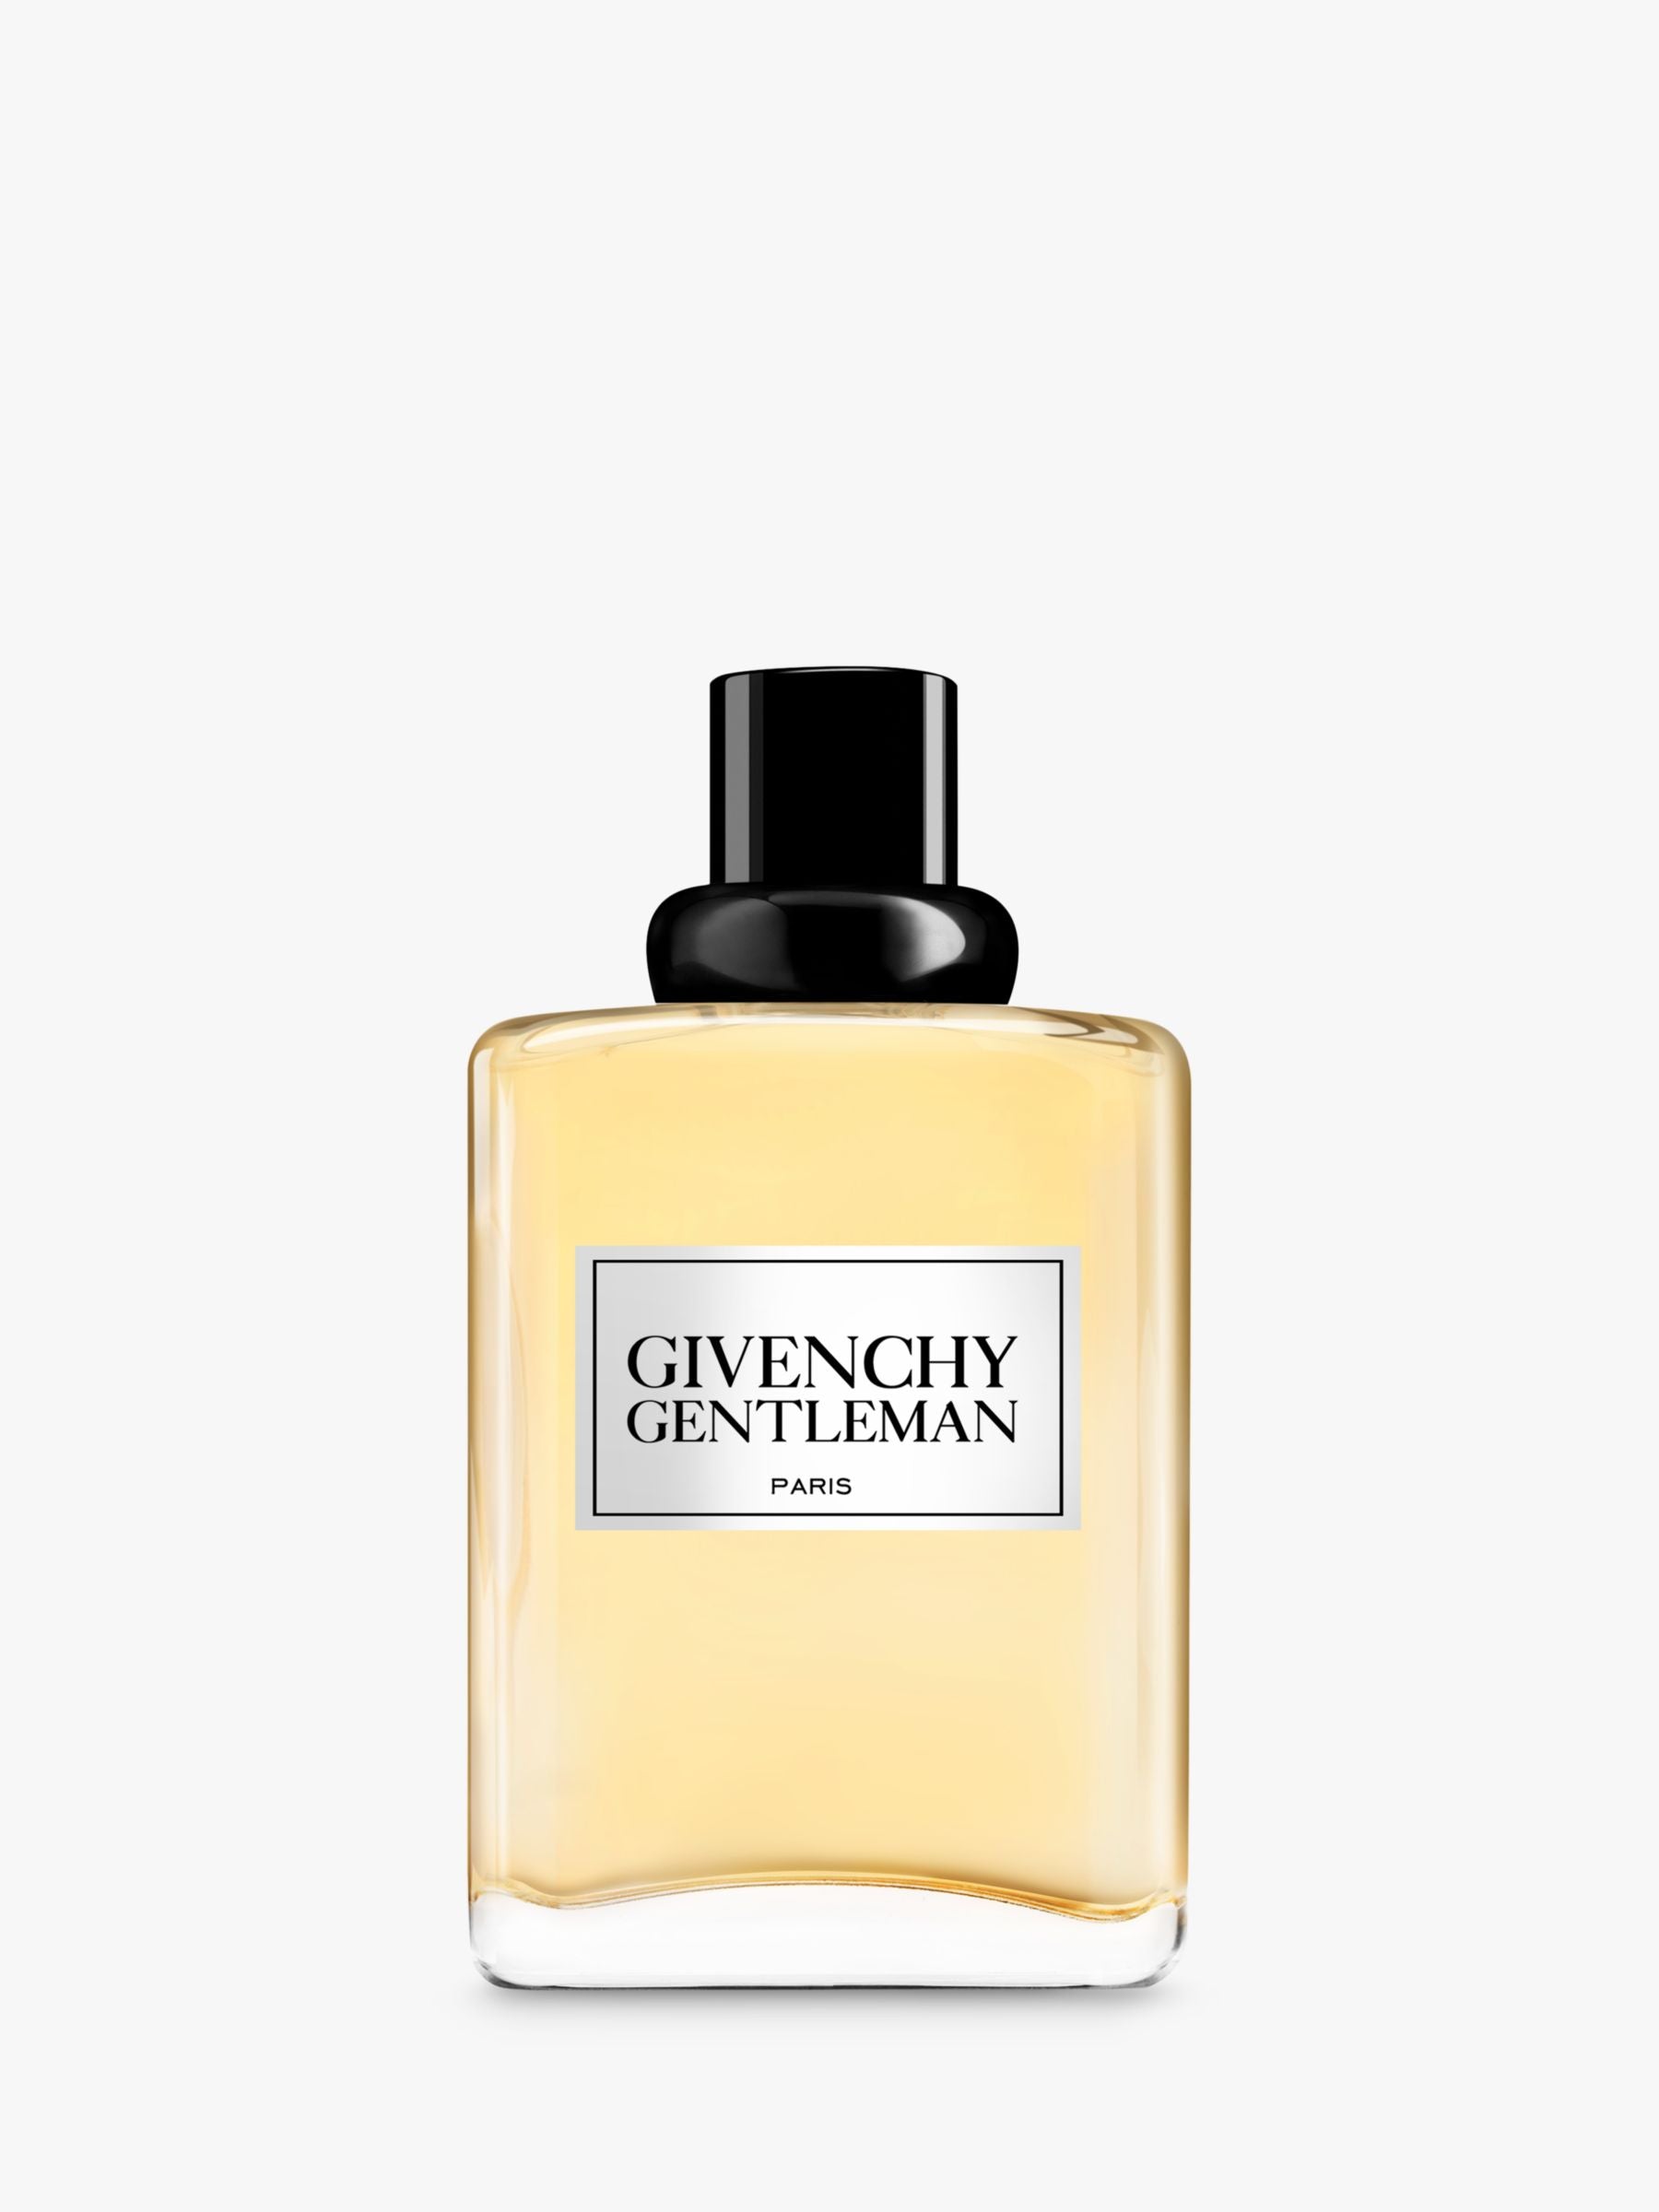 Givenchy Gentleman 100 ml Eau De Toilette Spray for Men